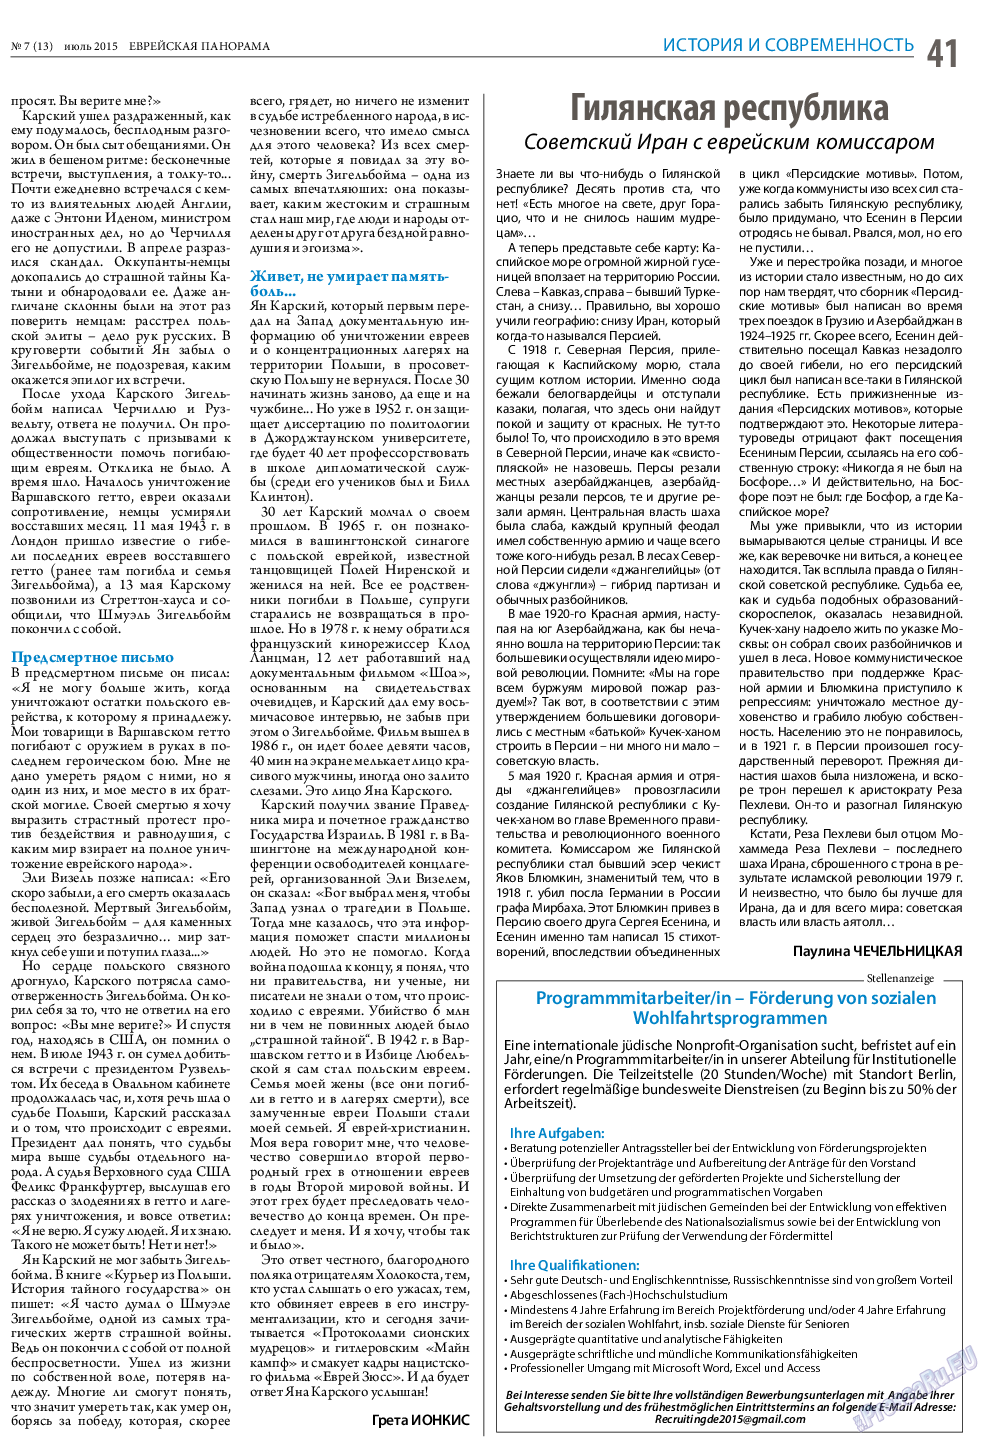 Еврейская панорама, газета. 2015 №7 стр.41